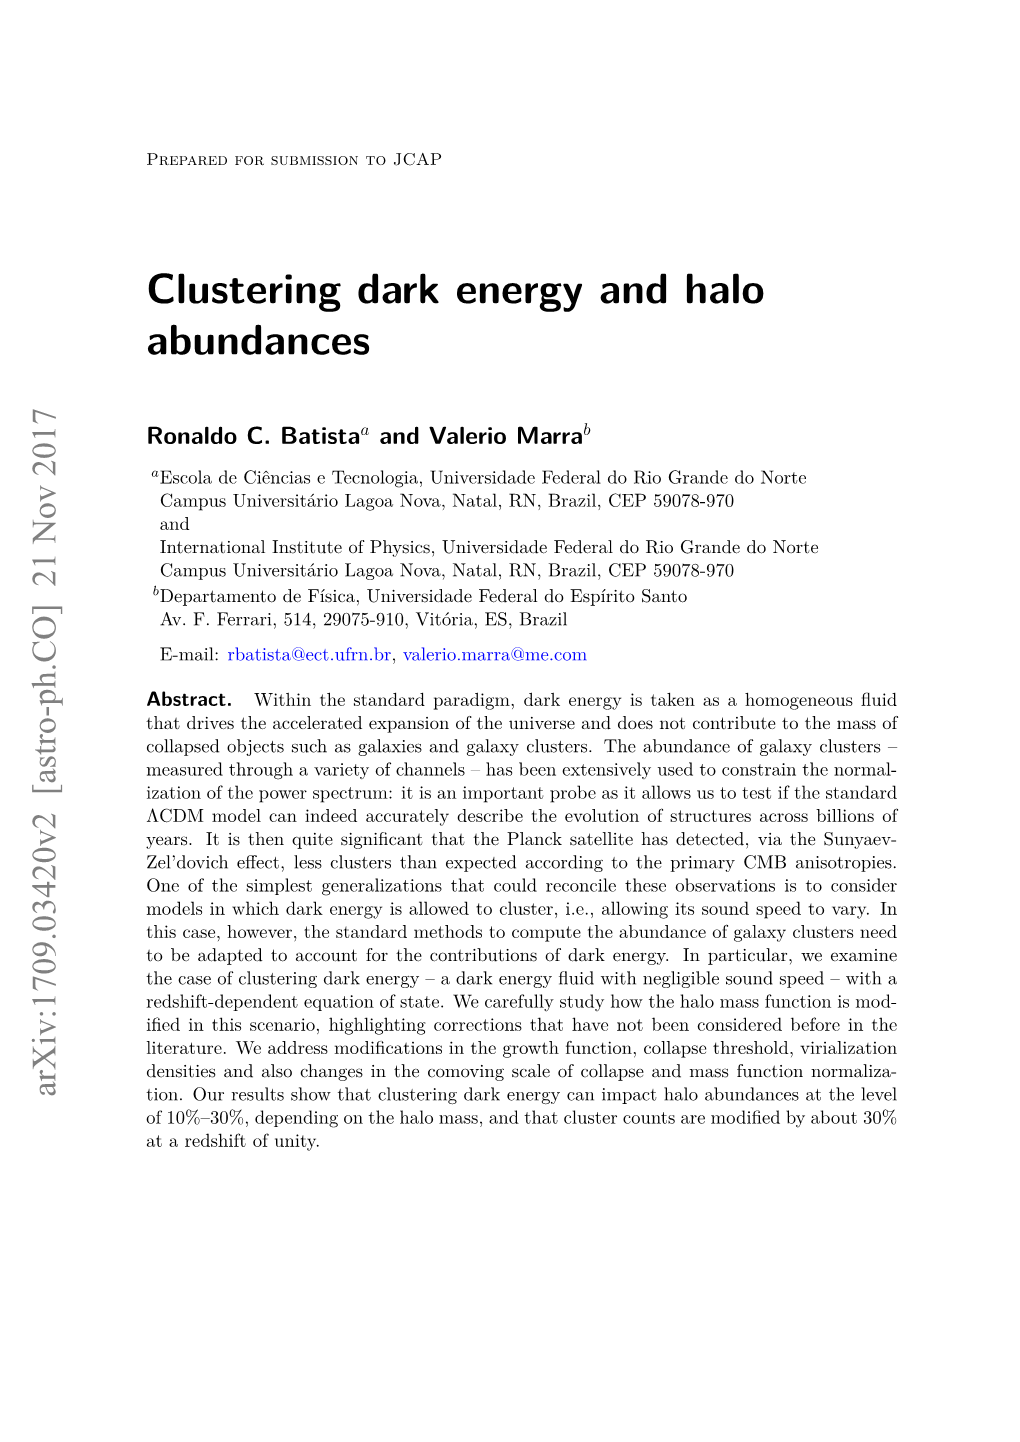 Clustering Dark Energy and Halo Abundances